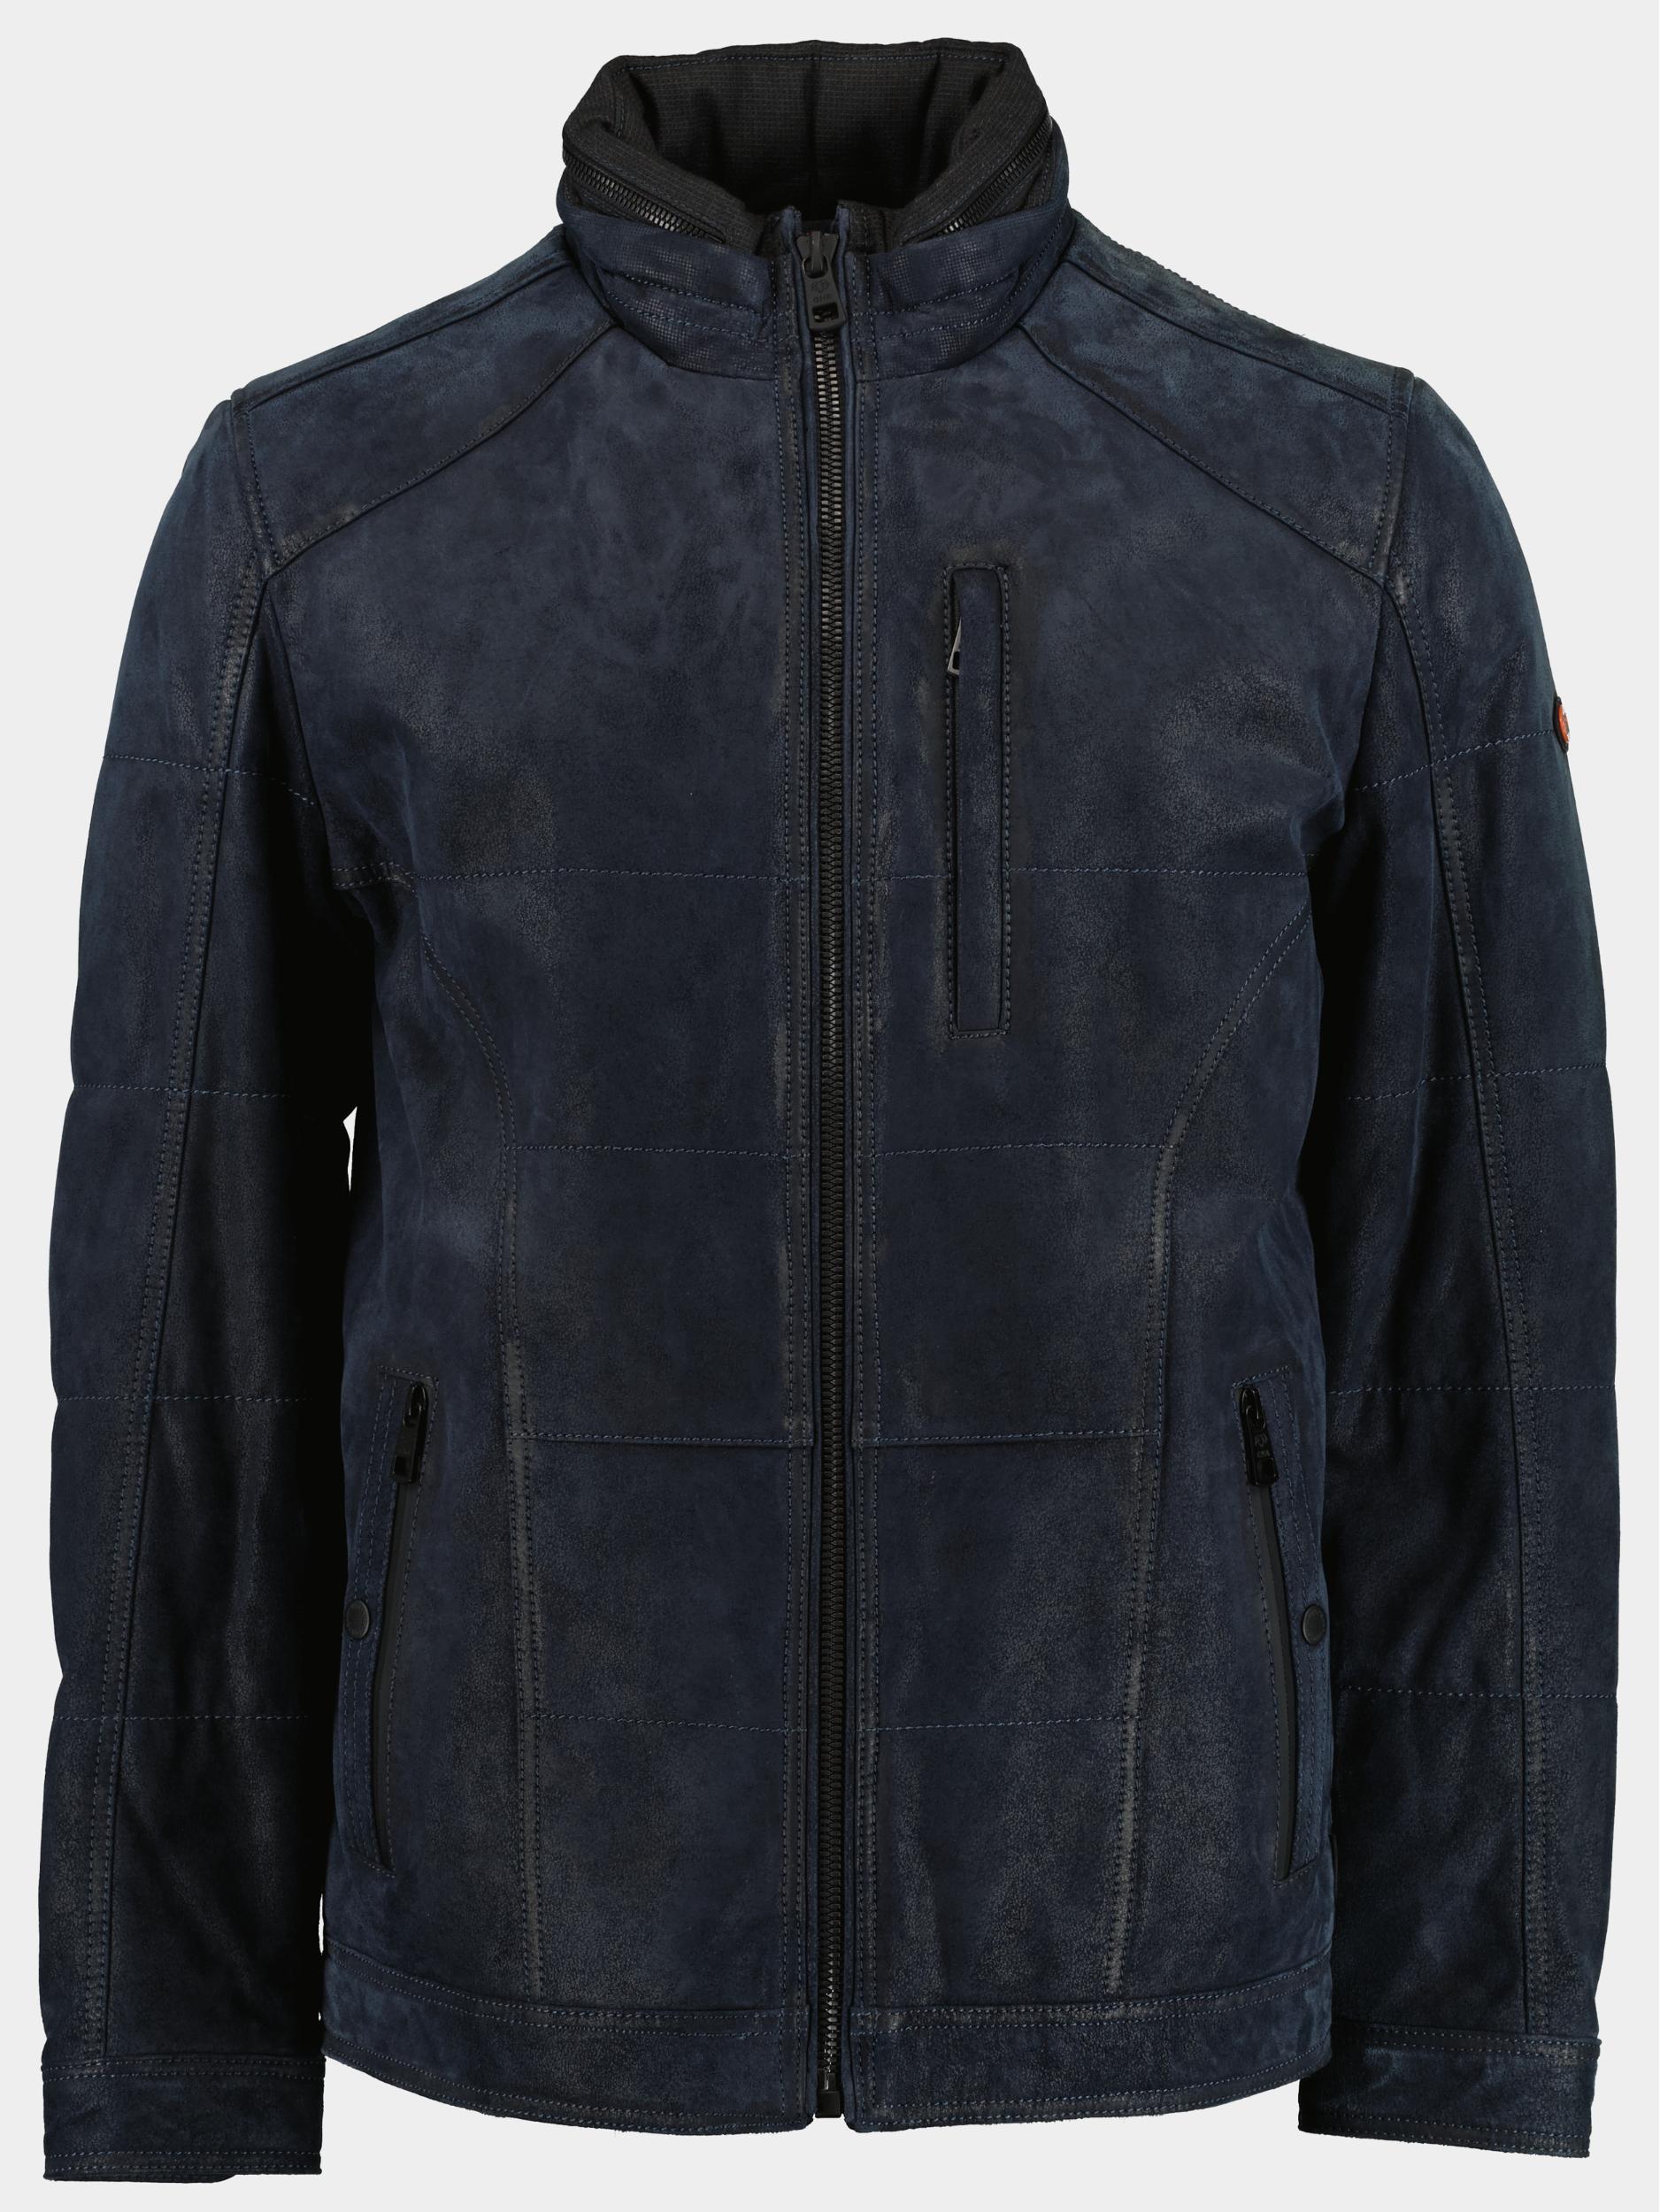 Afbeelding van DNR Lederen jack leather jacket 42752/799